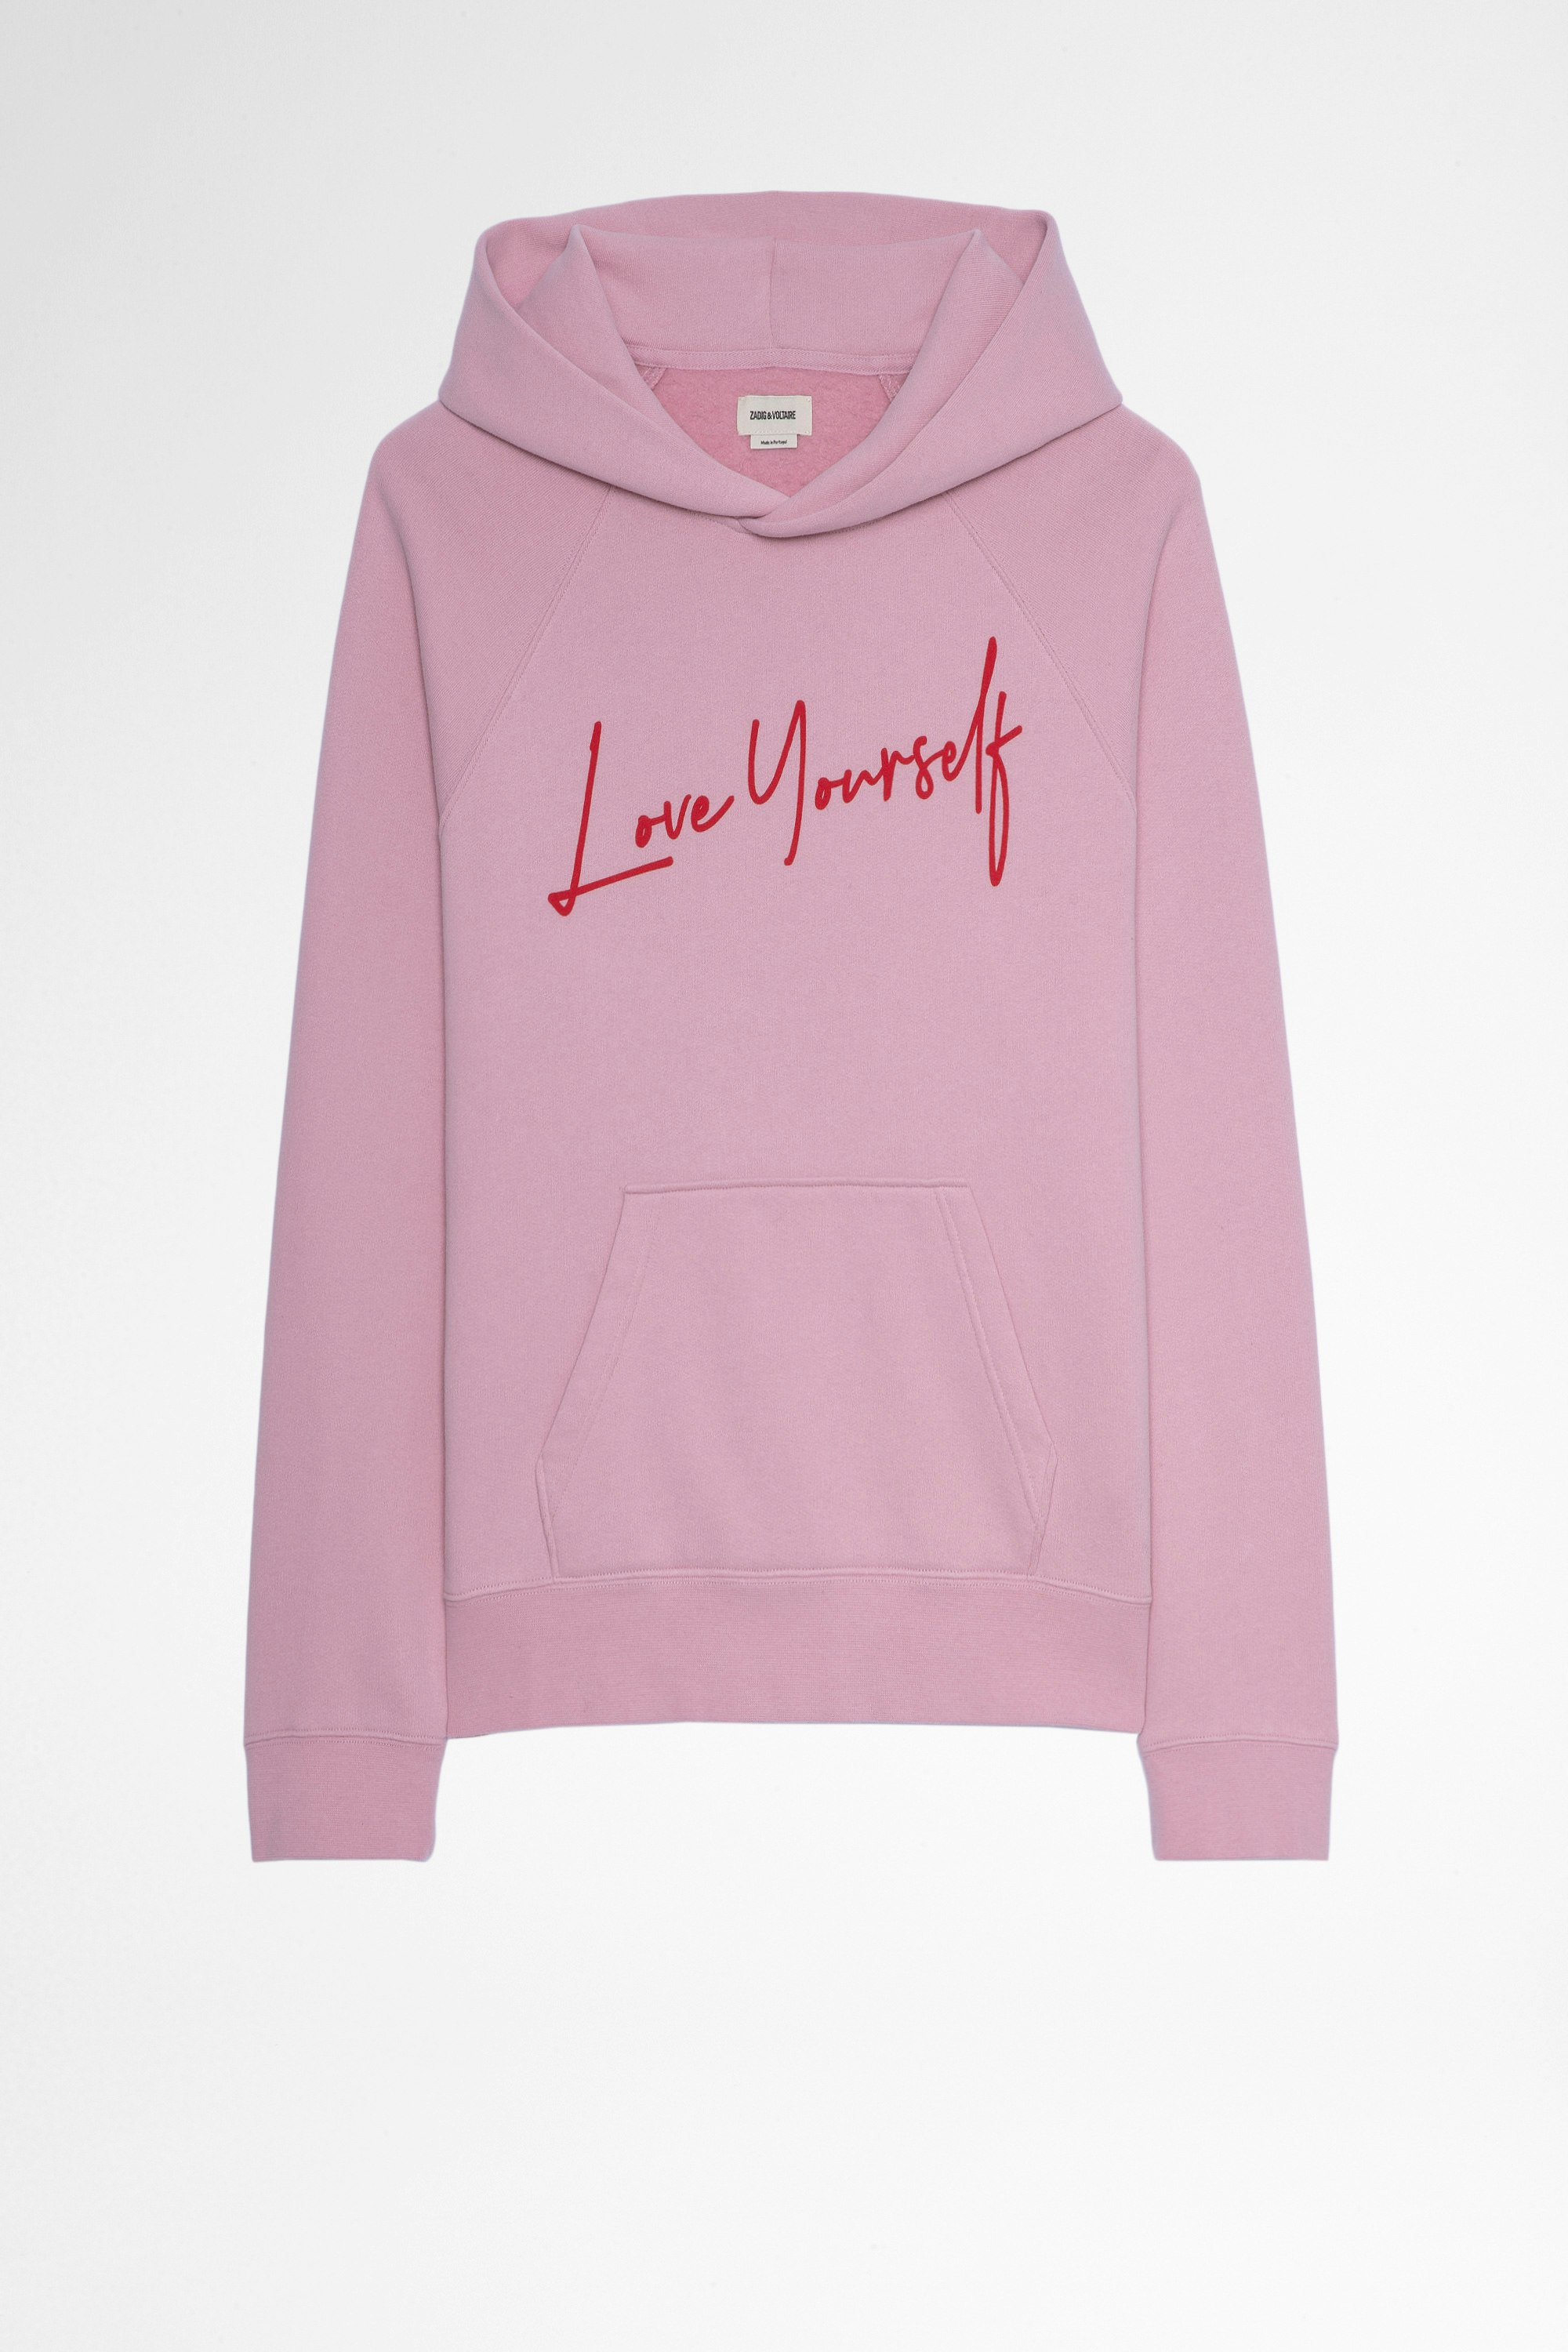 Georgy Photoprint Love Sweatshirt Women's pink love yourself hoodie